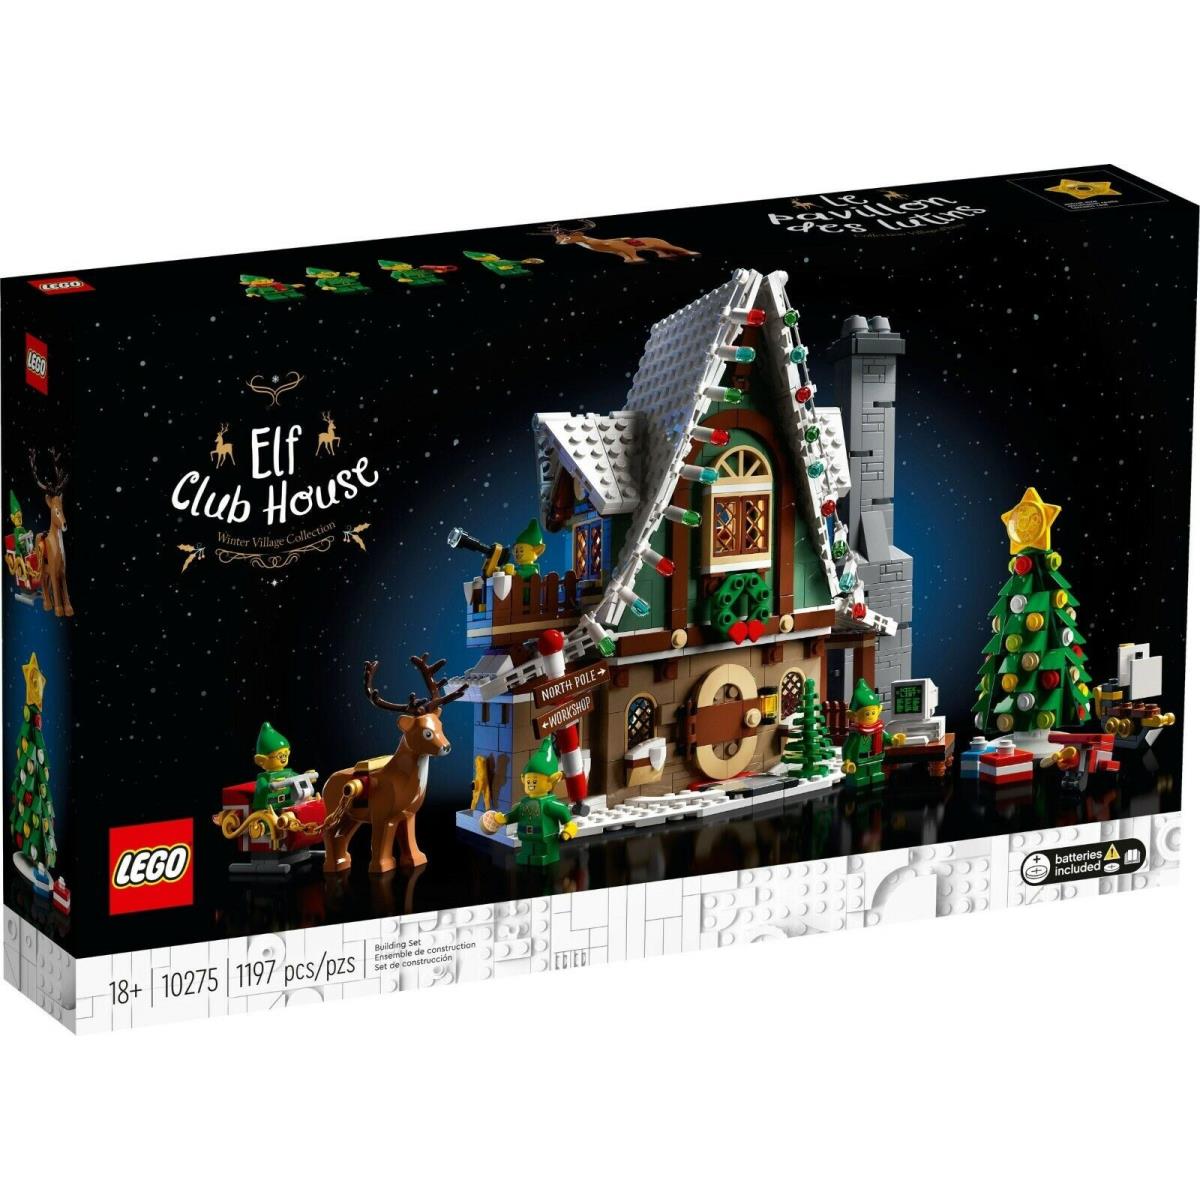 Lego Creator Expert Set: Elf Club House 10275